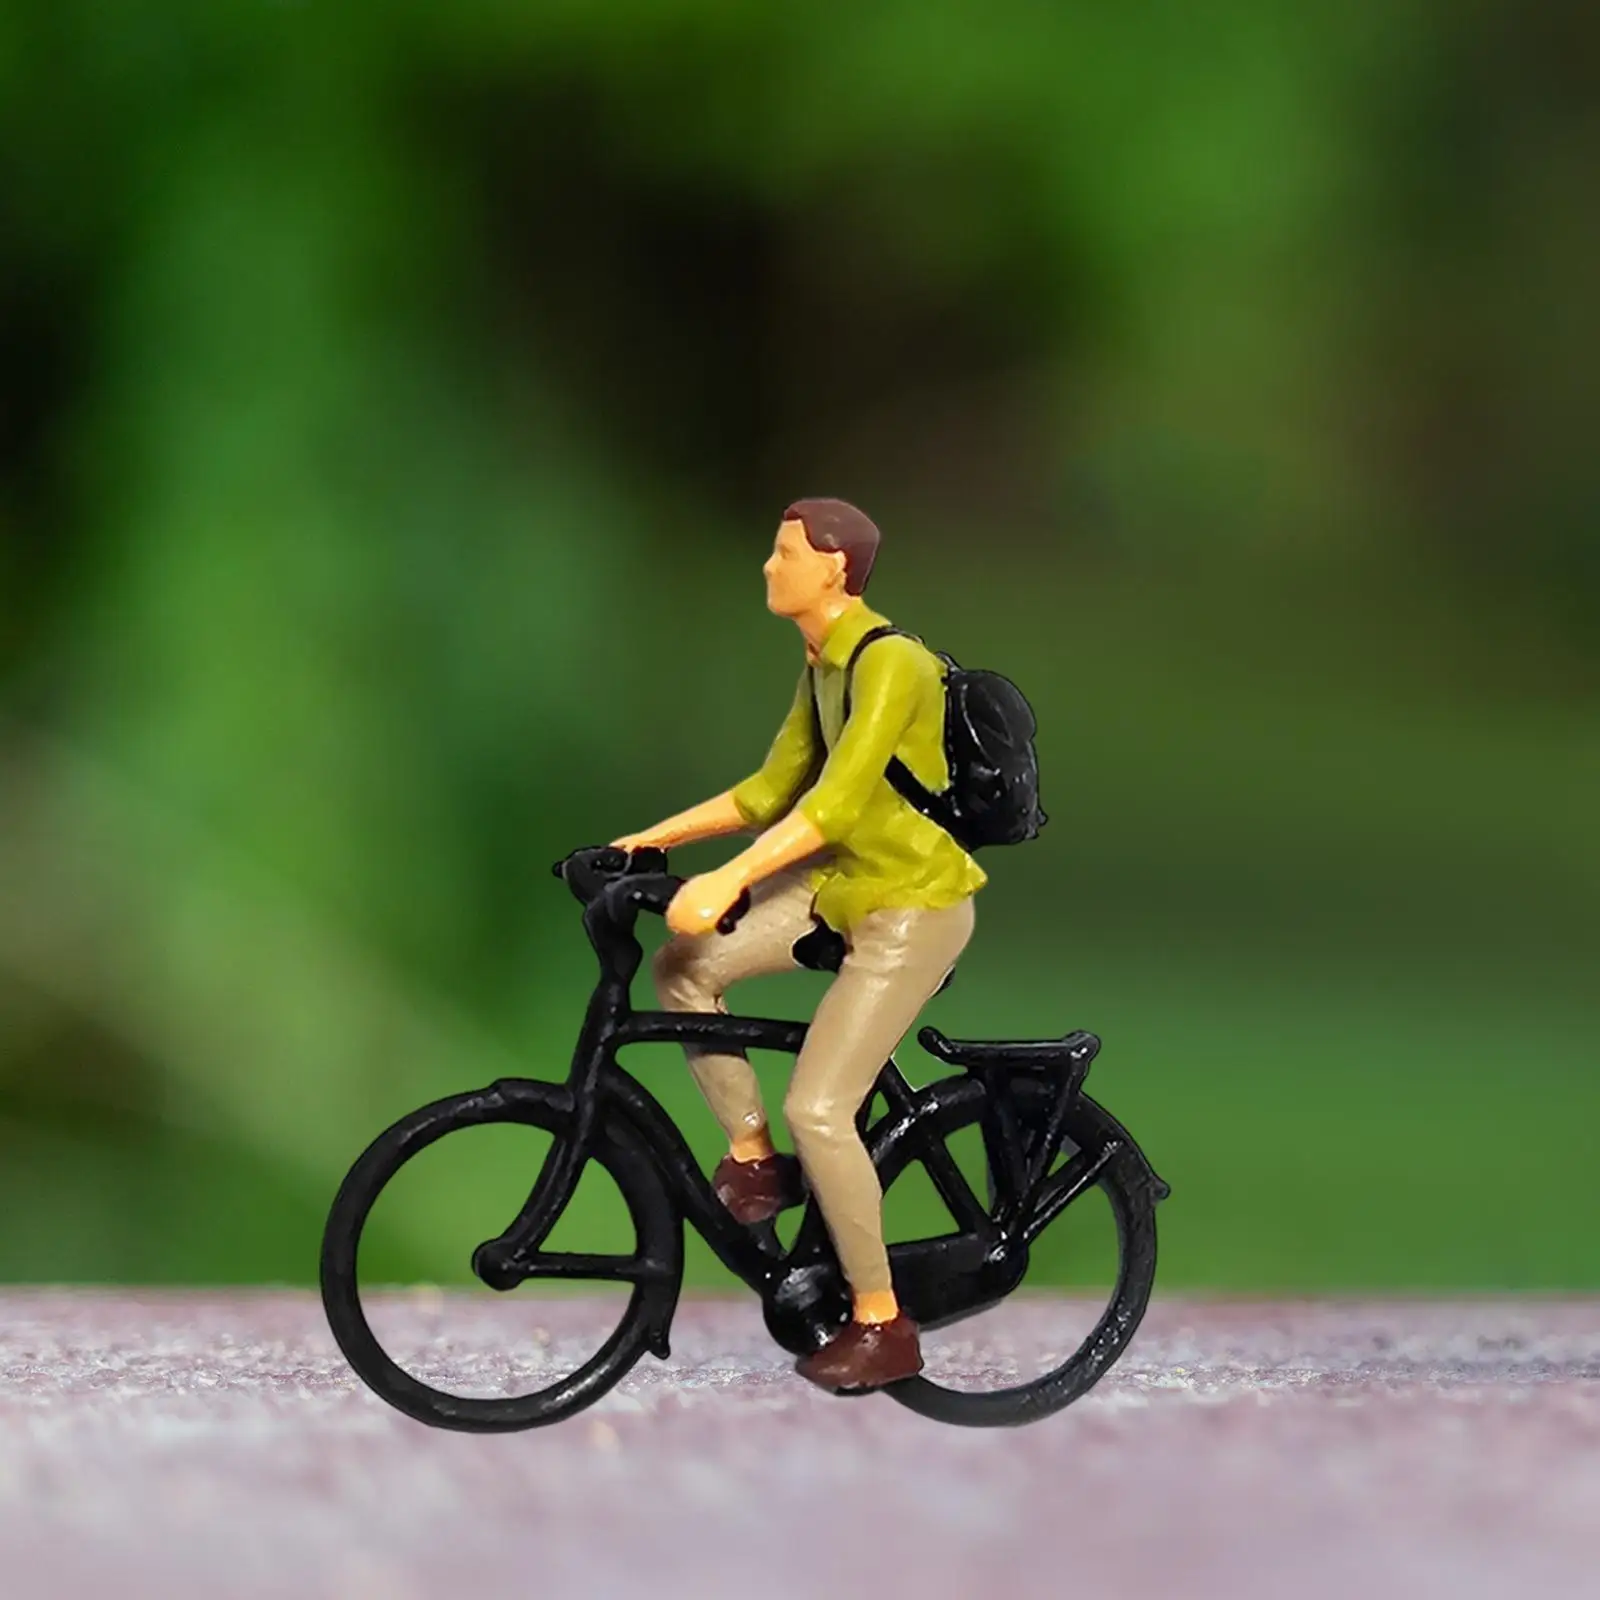 1/87 Scale Cyclist Figurine Mini People Model for DIY Scene Dollhouse Layout